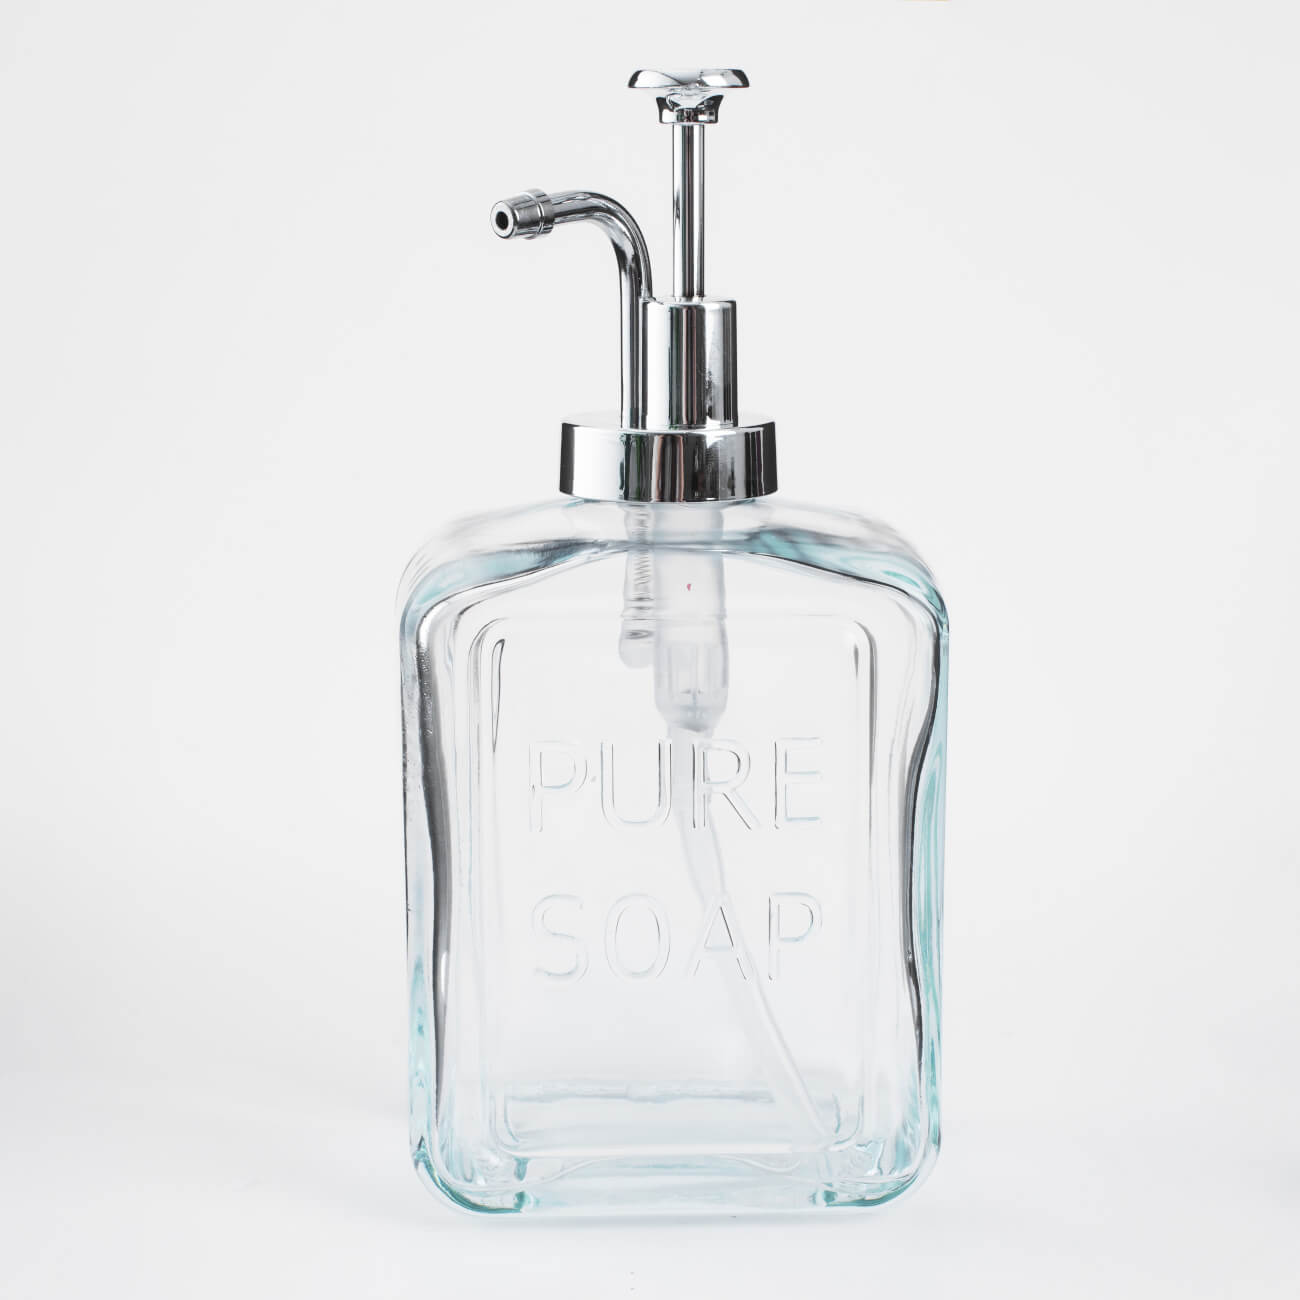 Диспенсер для жидкого мыла, 550 мл, стекло/пластик, серебристый, Pure soap, Clear title